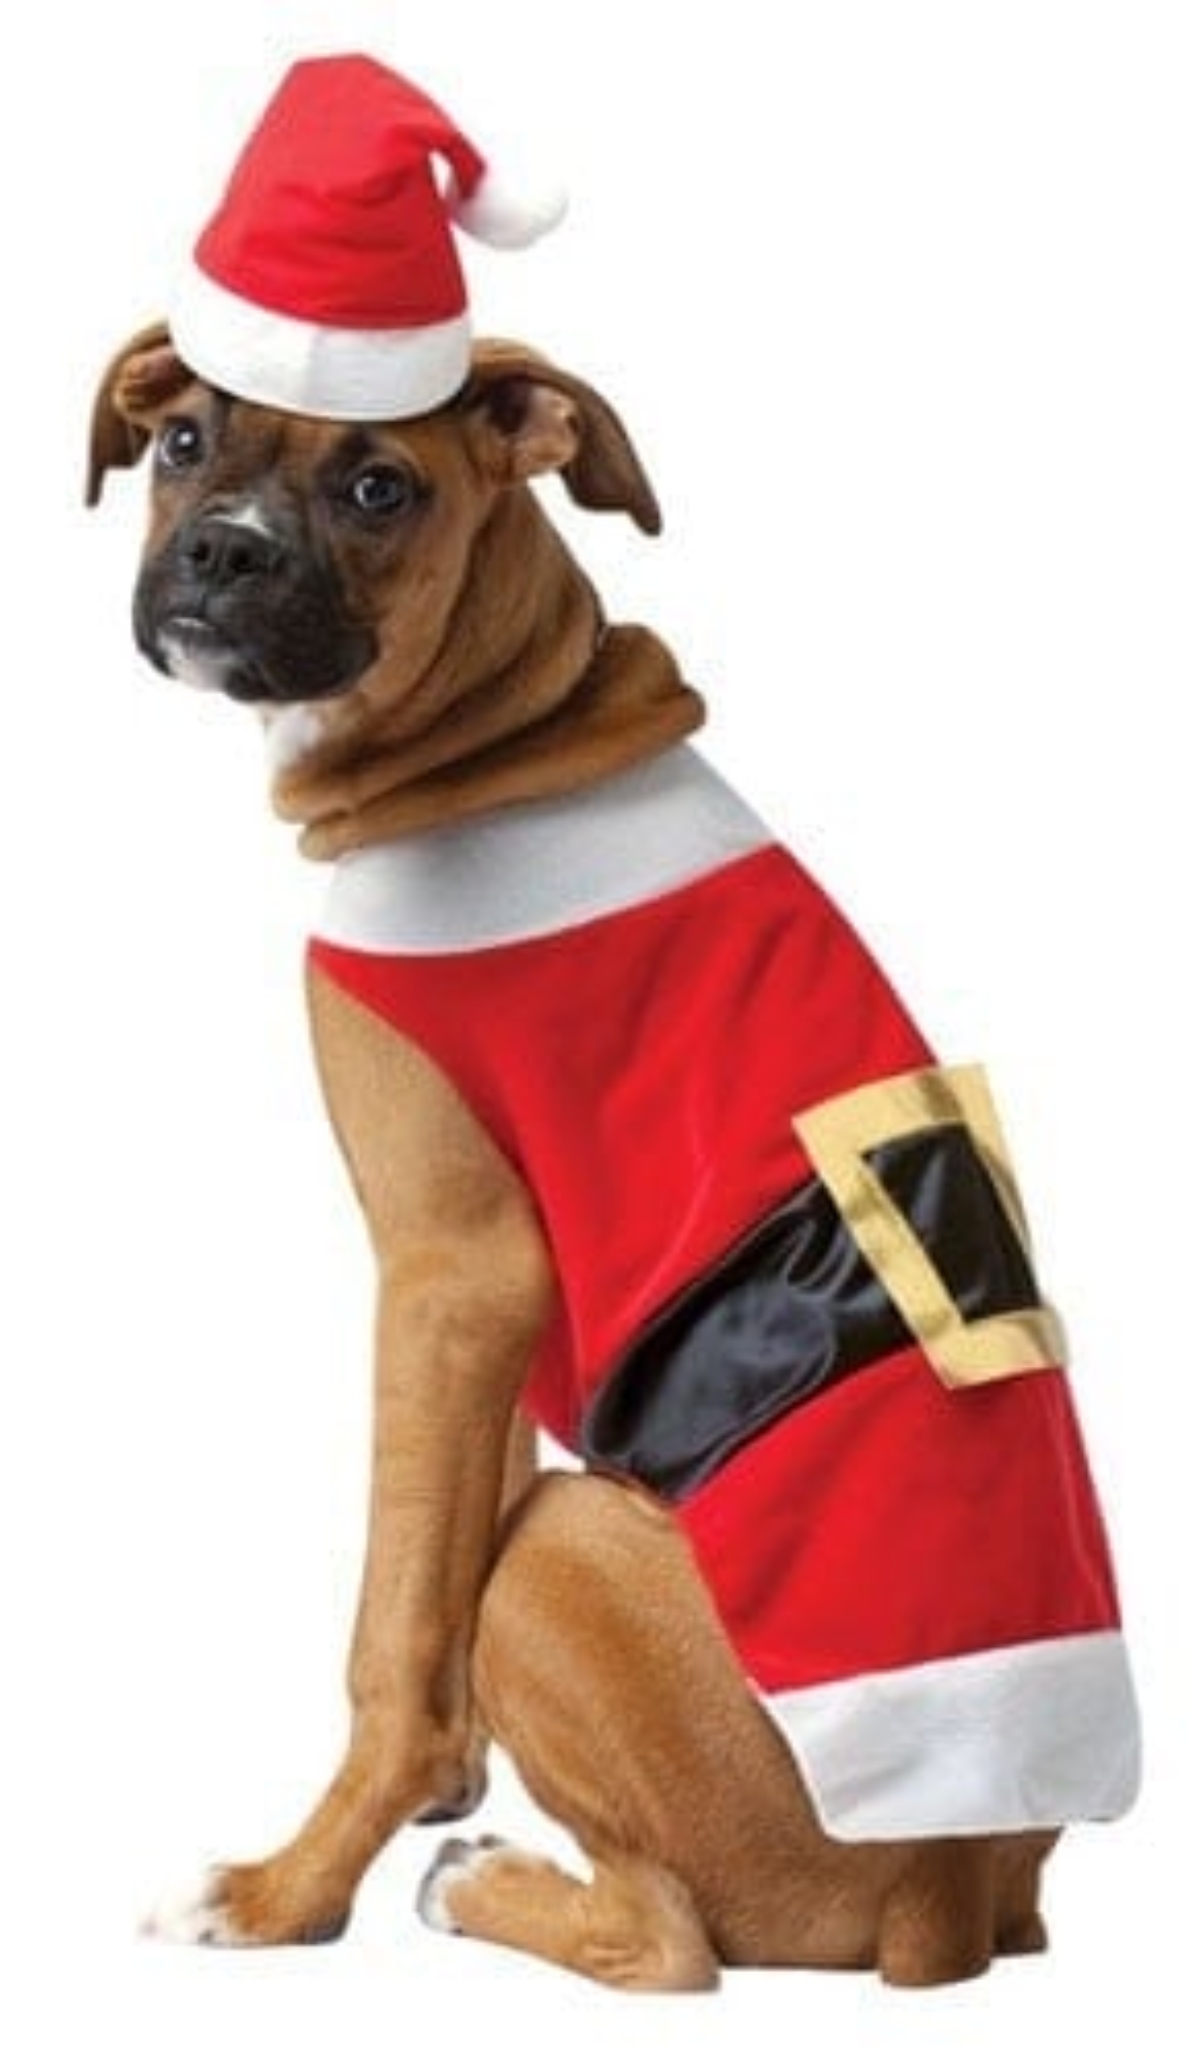 CHRISTMAS NOVELTY DOG FANCY DRESS OUTFITS SANTA ELF REINDEER HOODY SWEATER